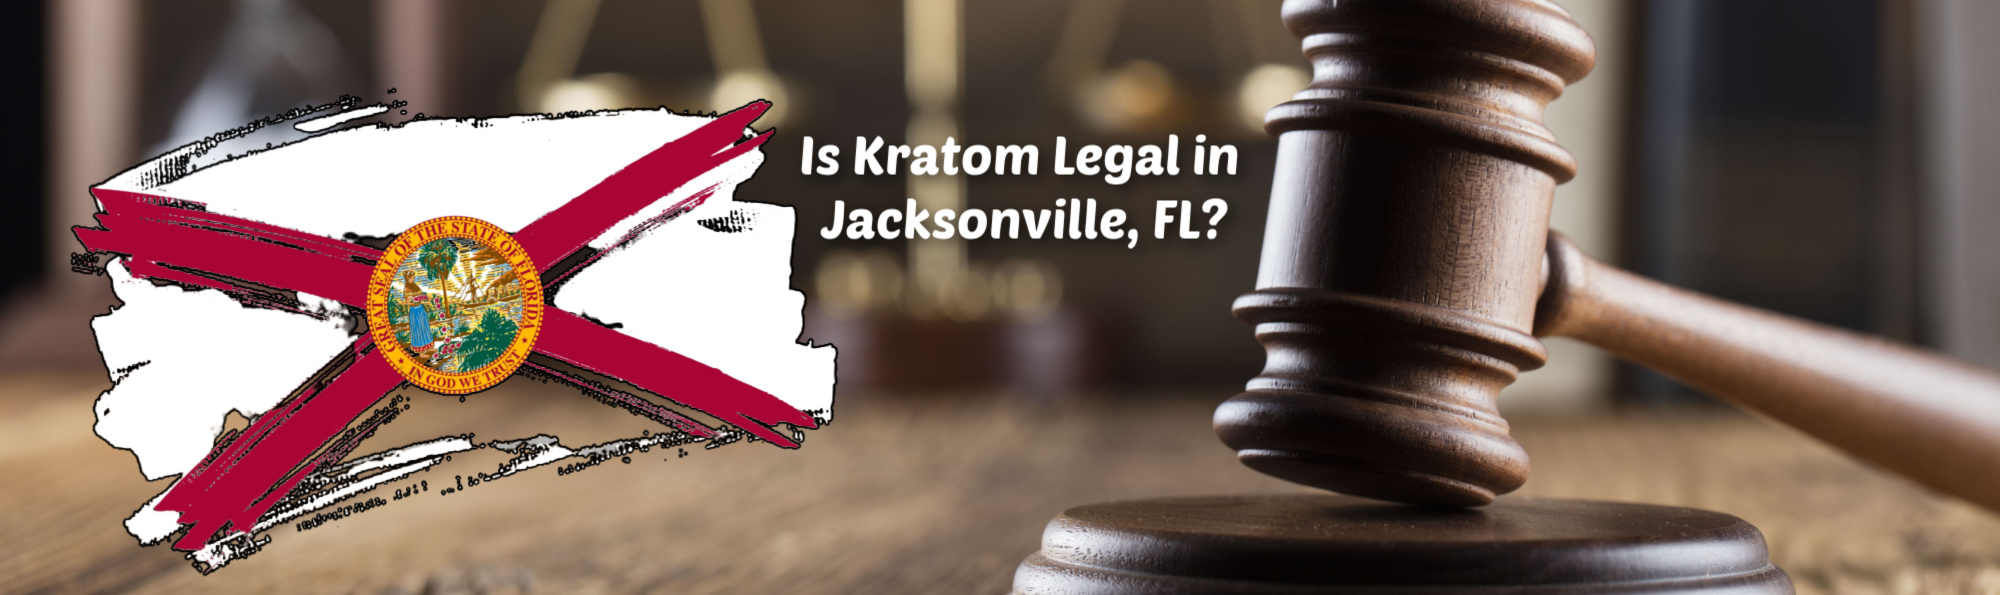 image of is kratom legal in jacksonville fl